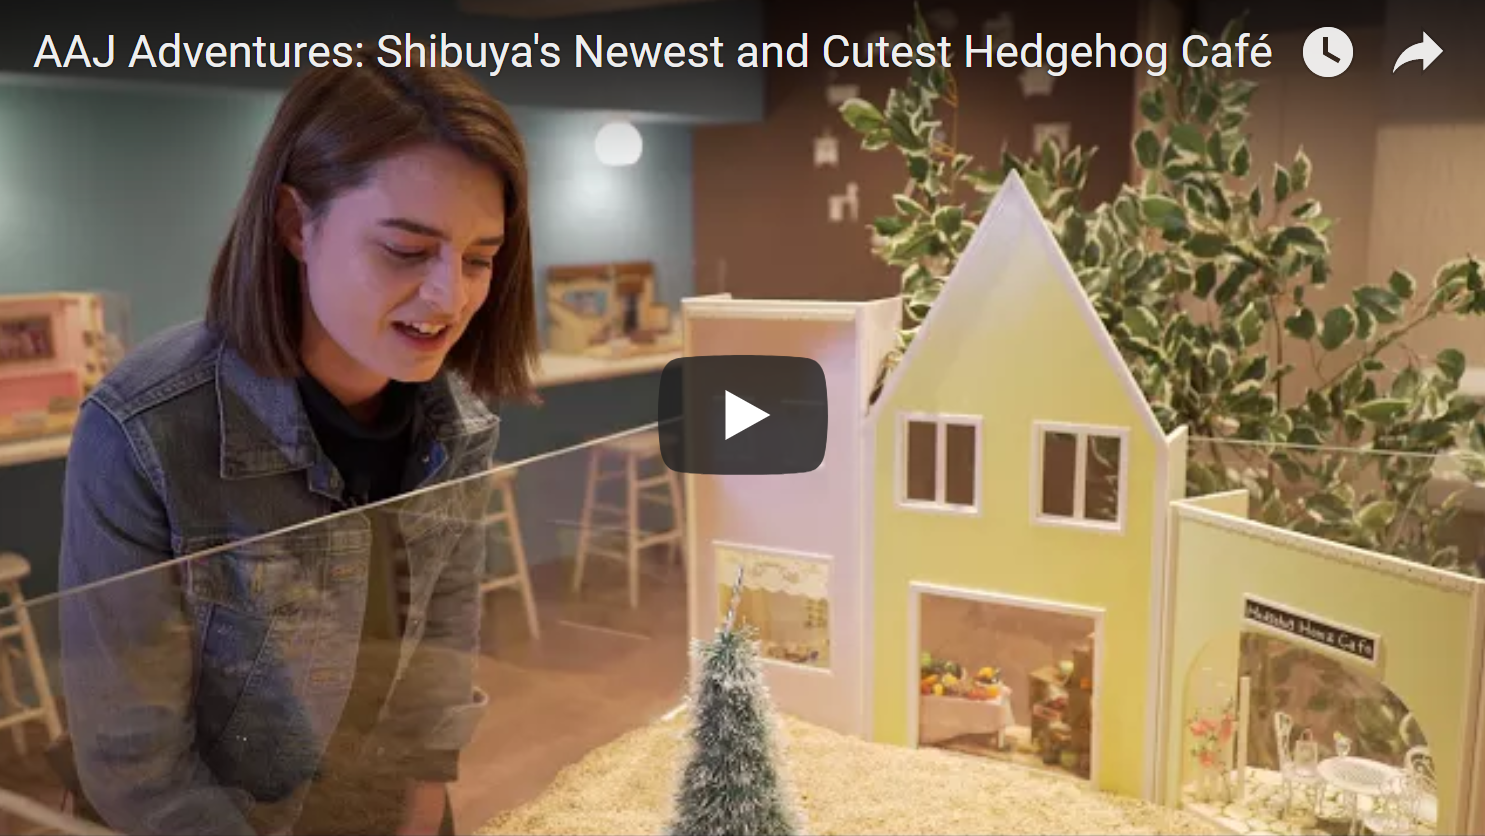 AAJ Adventures: Shibuya's Cutest Hedgehog Café